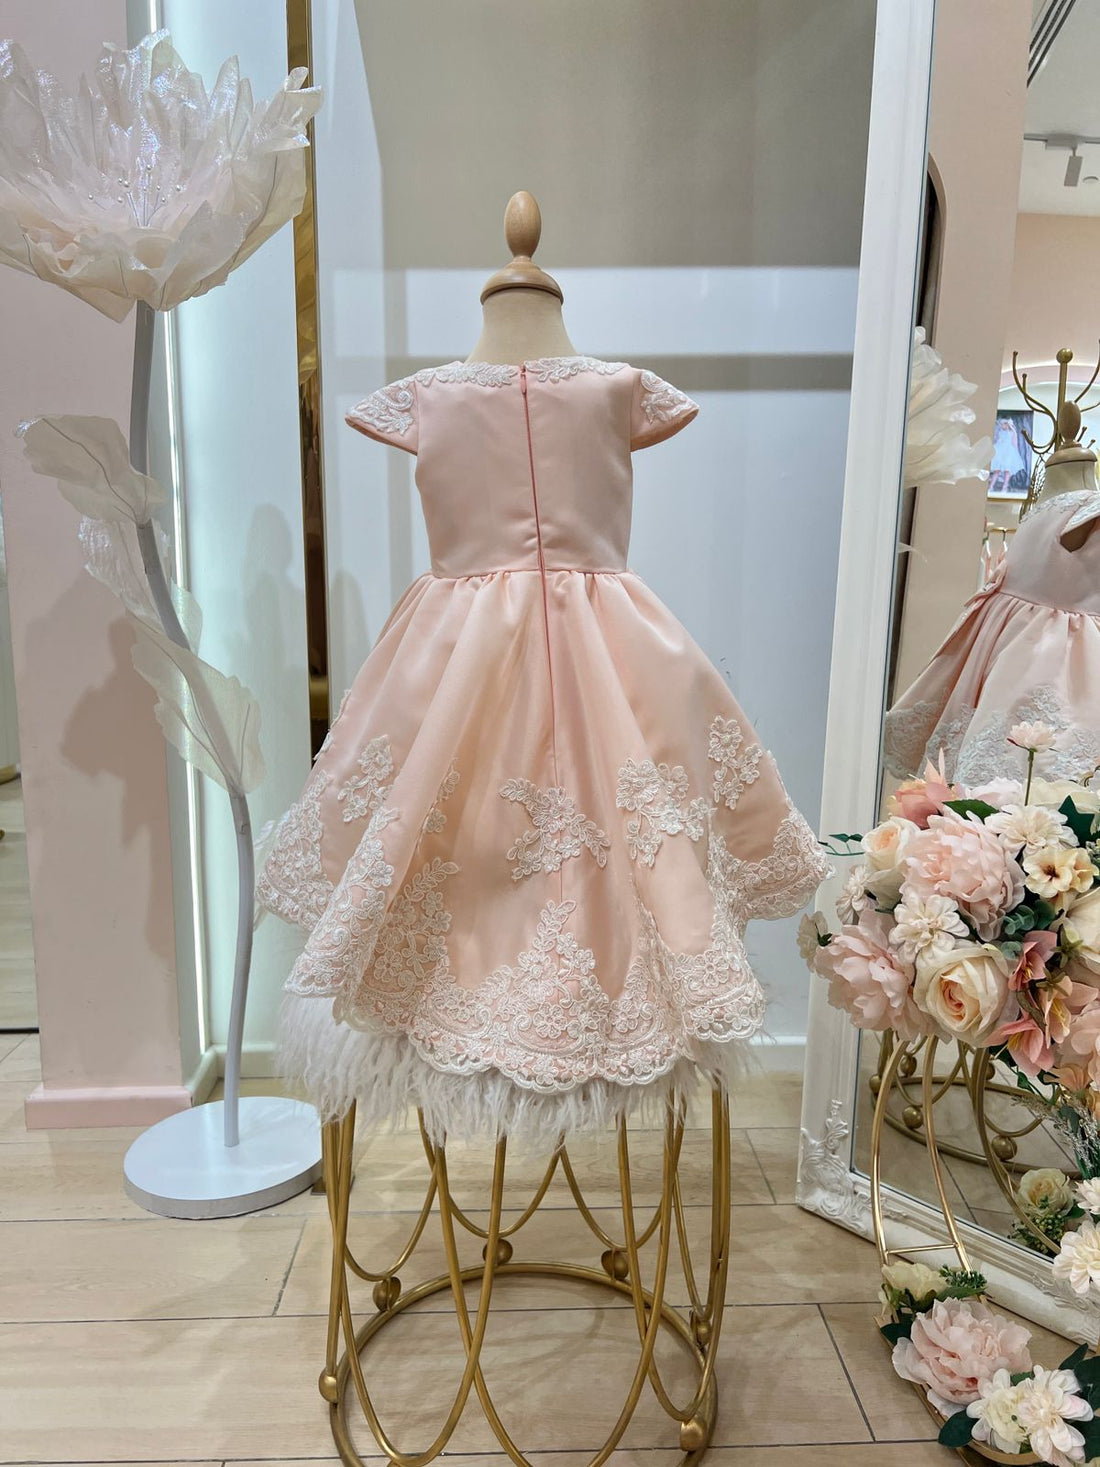 Veronica Pink Dress 23M87